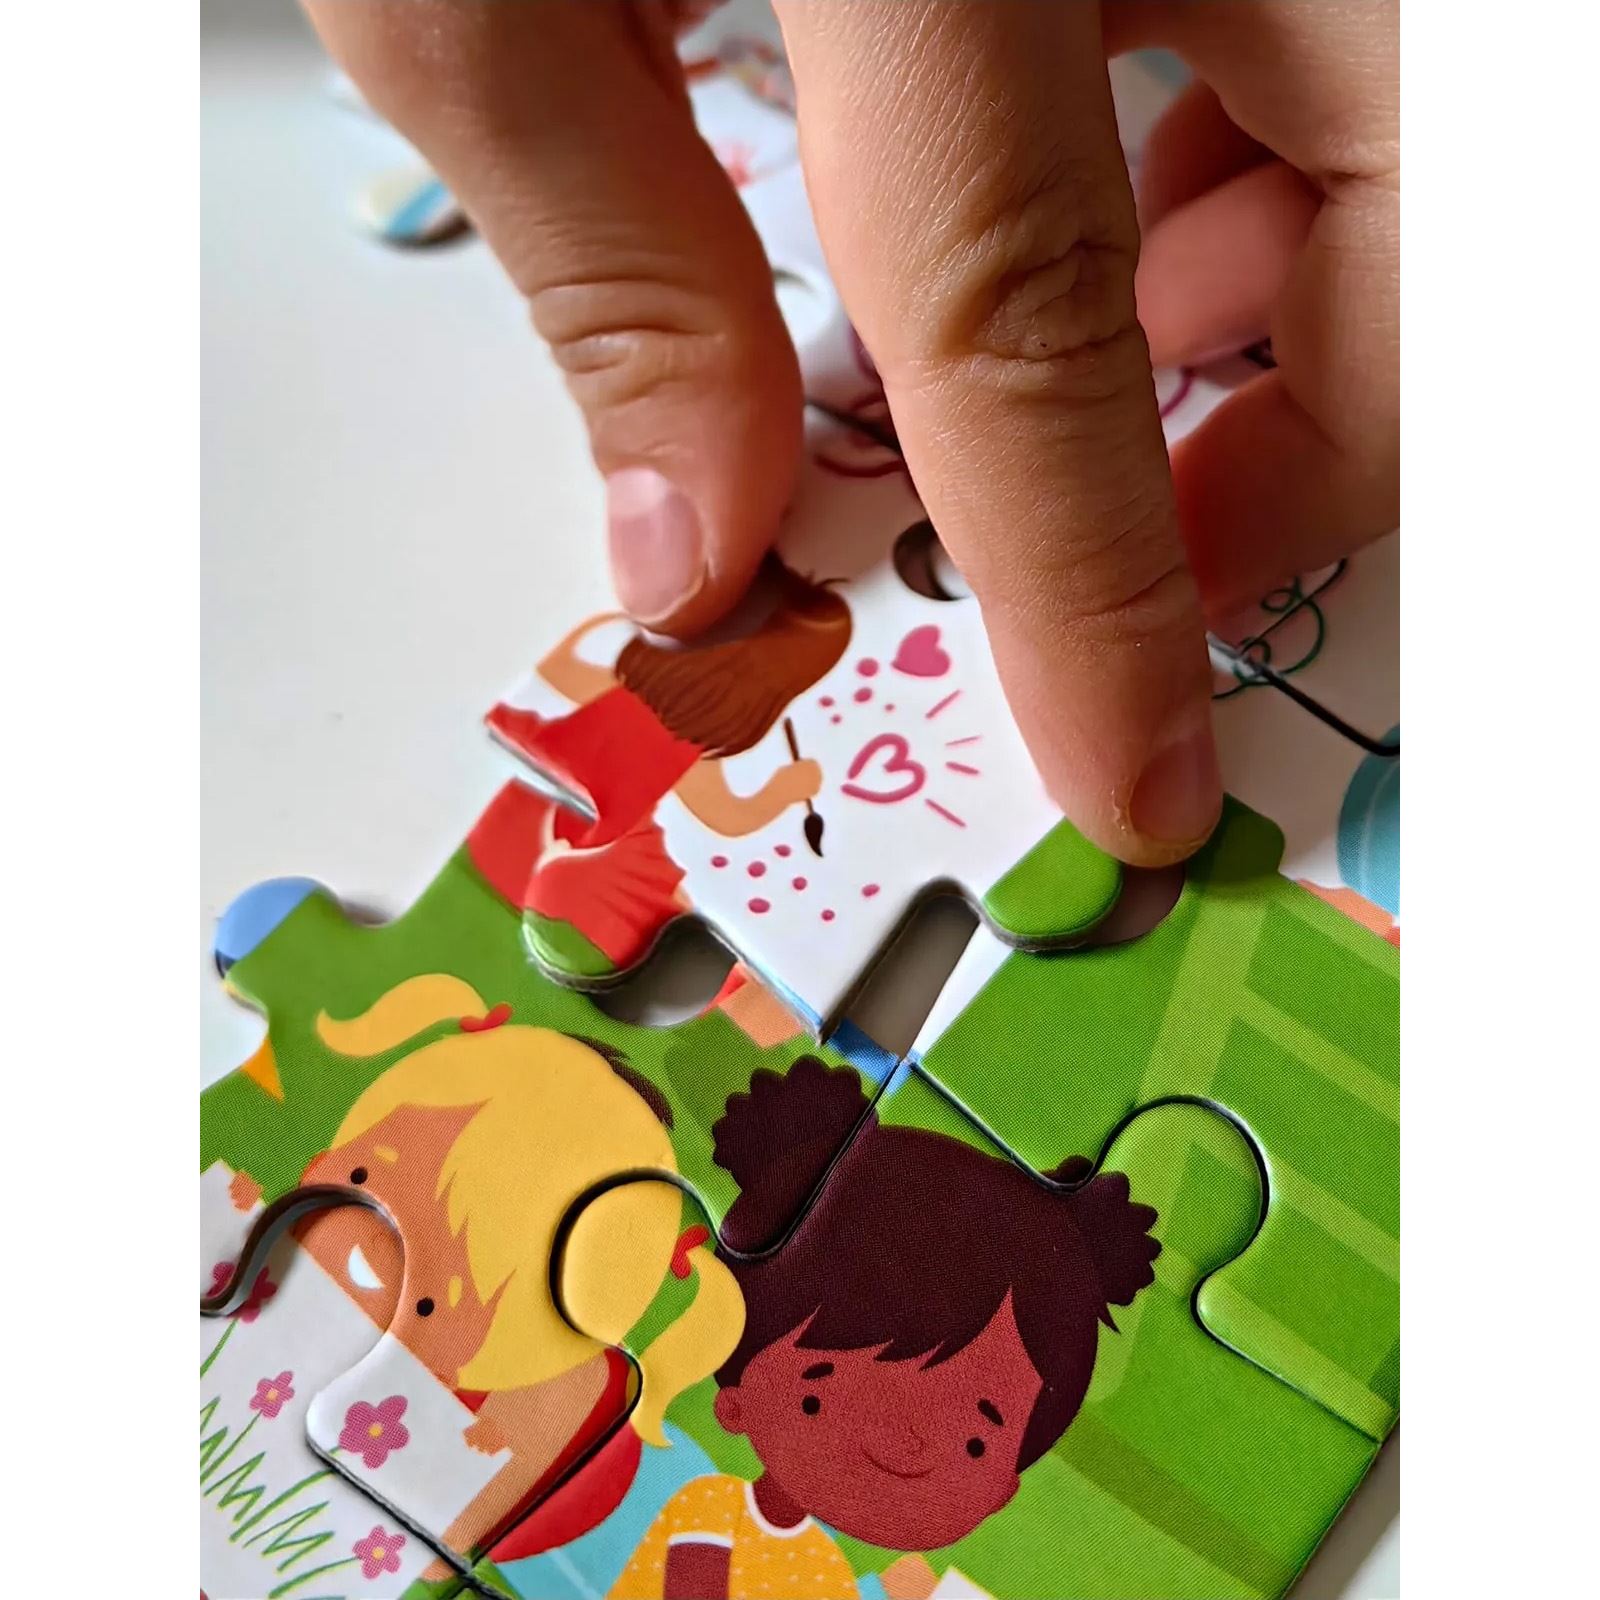 Doer Kids Sanat Sınıfı Mini Puzzle 40 Parça Renkli